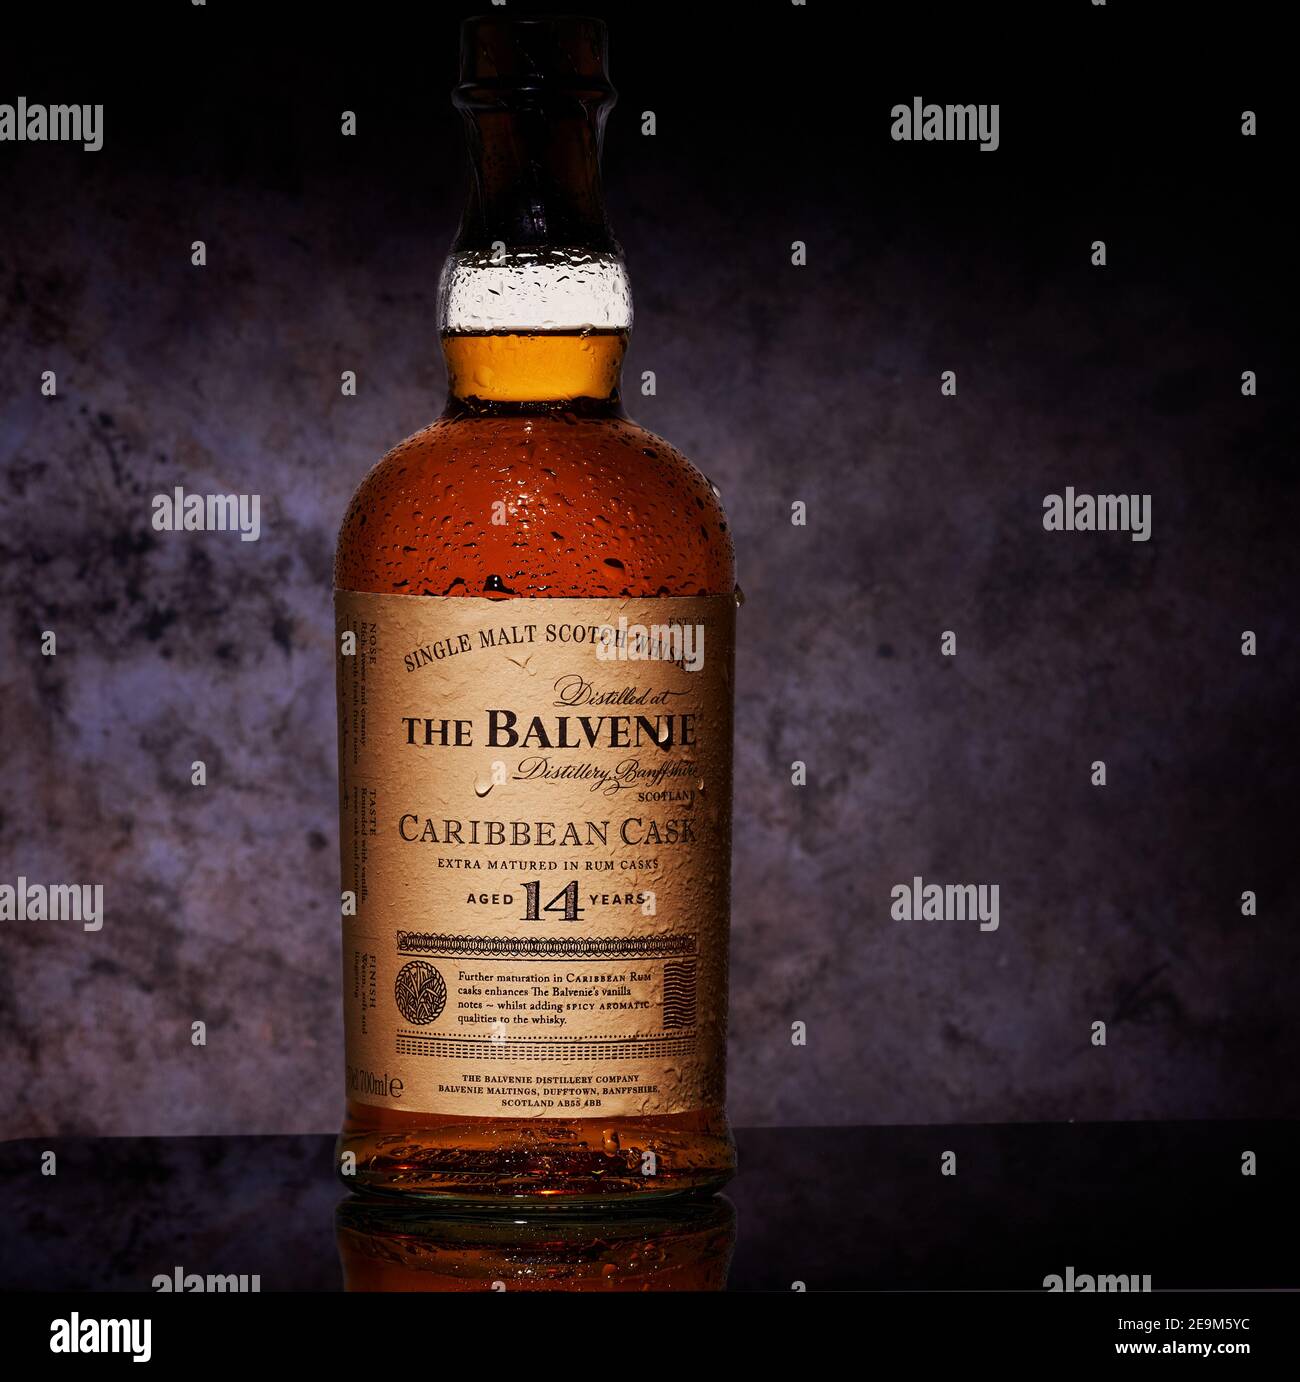 Balvenie 14 Year Old Caribbean Cask Whisky bottle Stock Photo